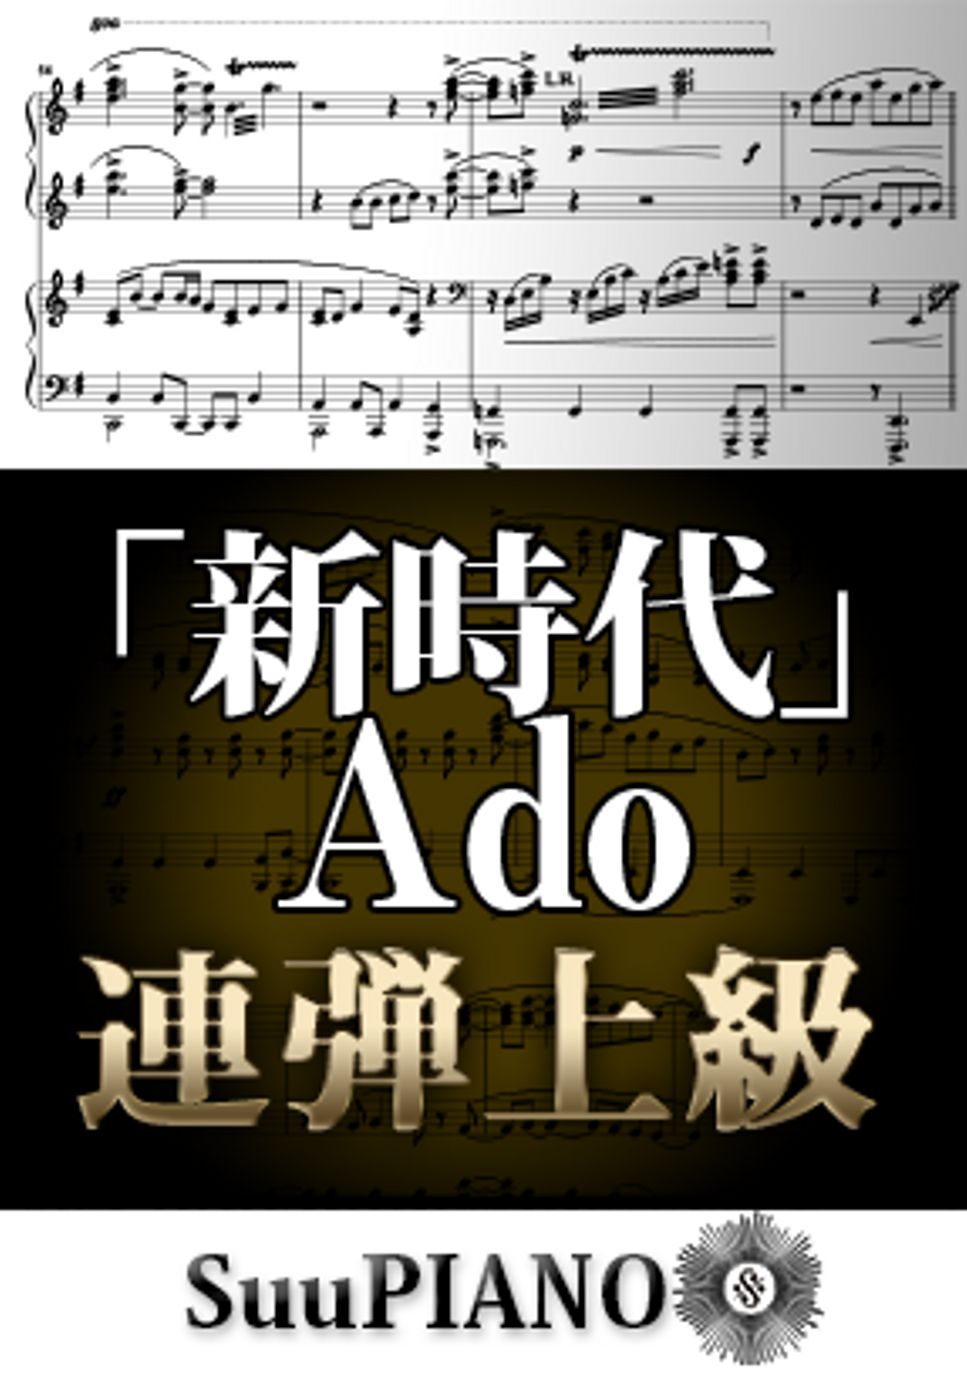 Ado - 新時代 (ピアノ連弾上級  / 映画／劇場版 ONE PIECE FILM RED(テーマ)) by Suu